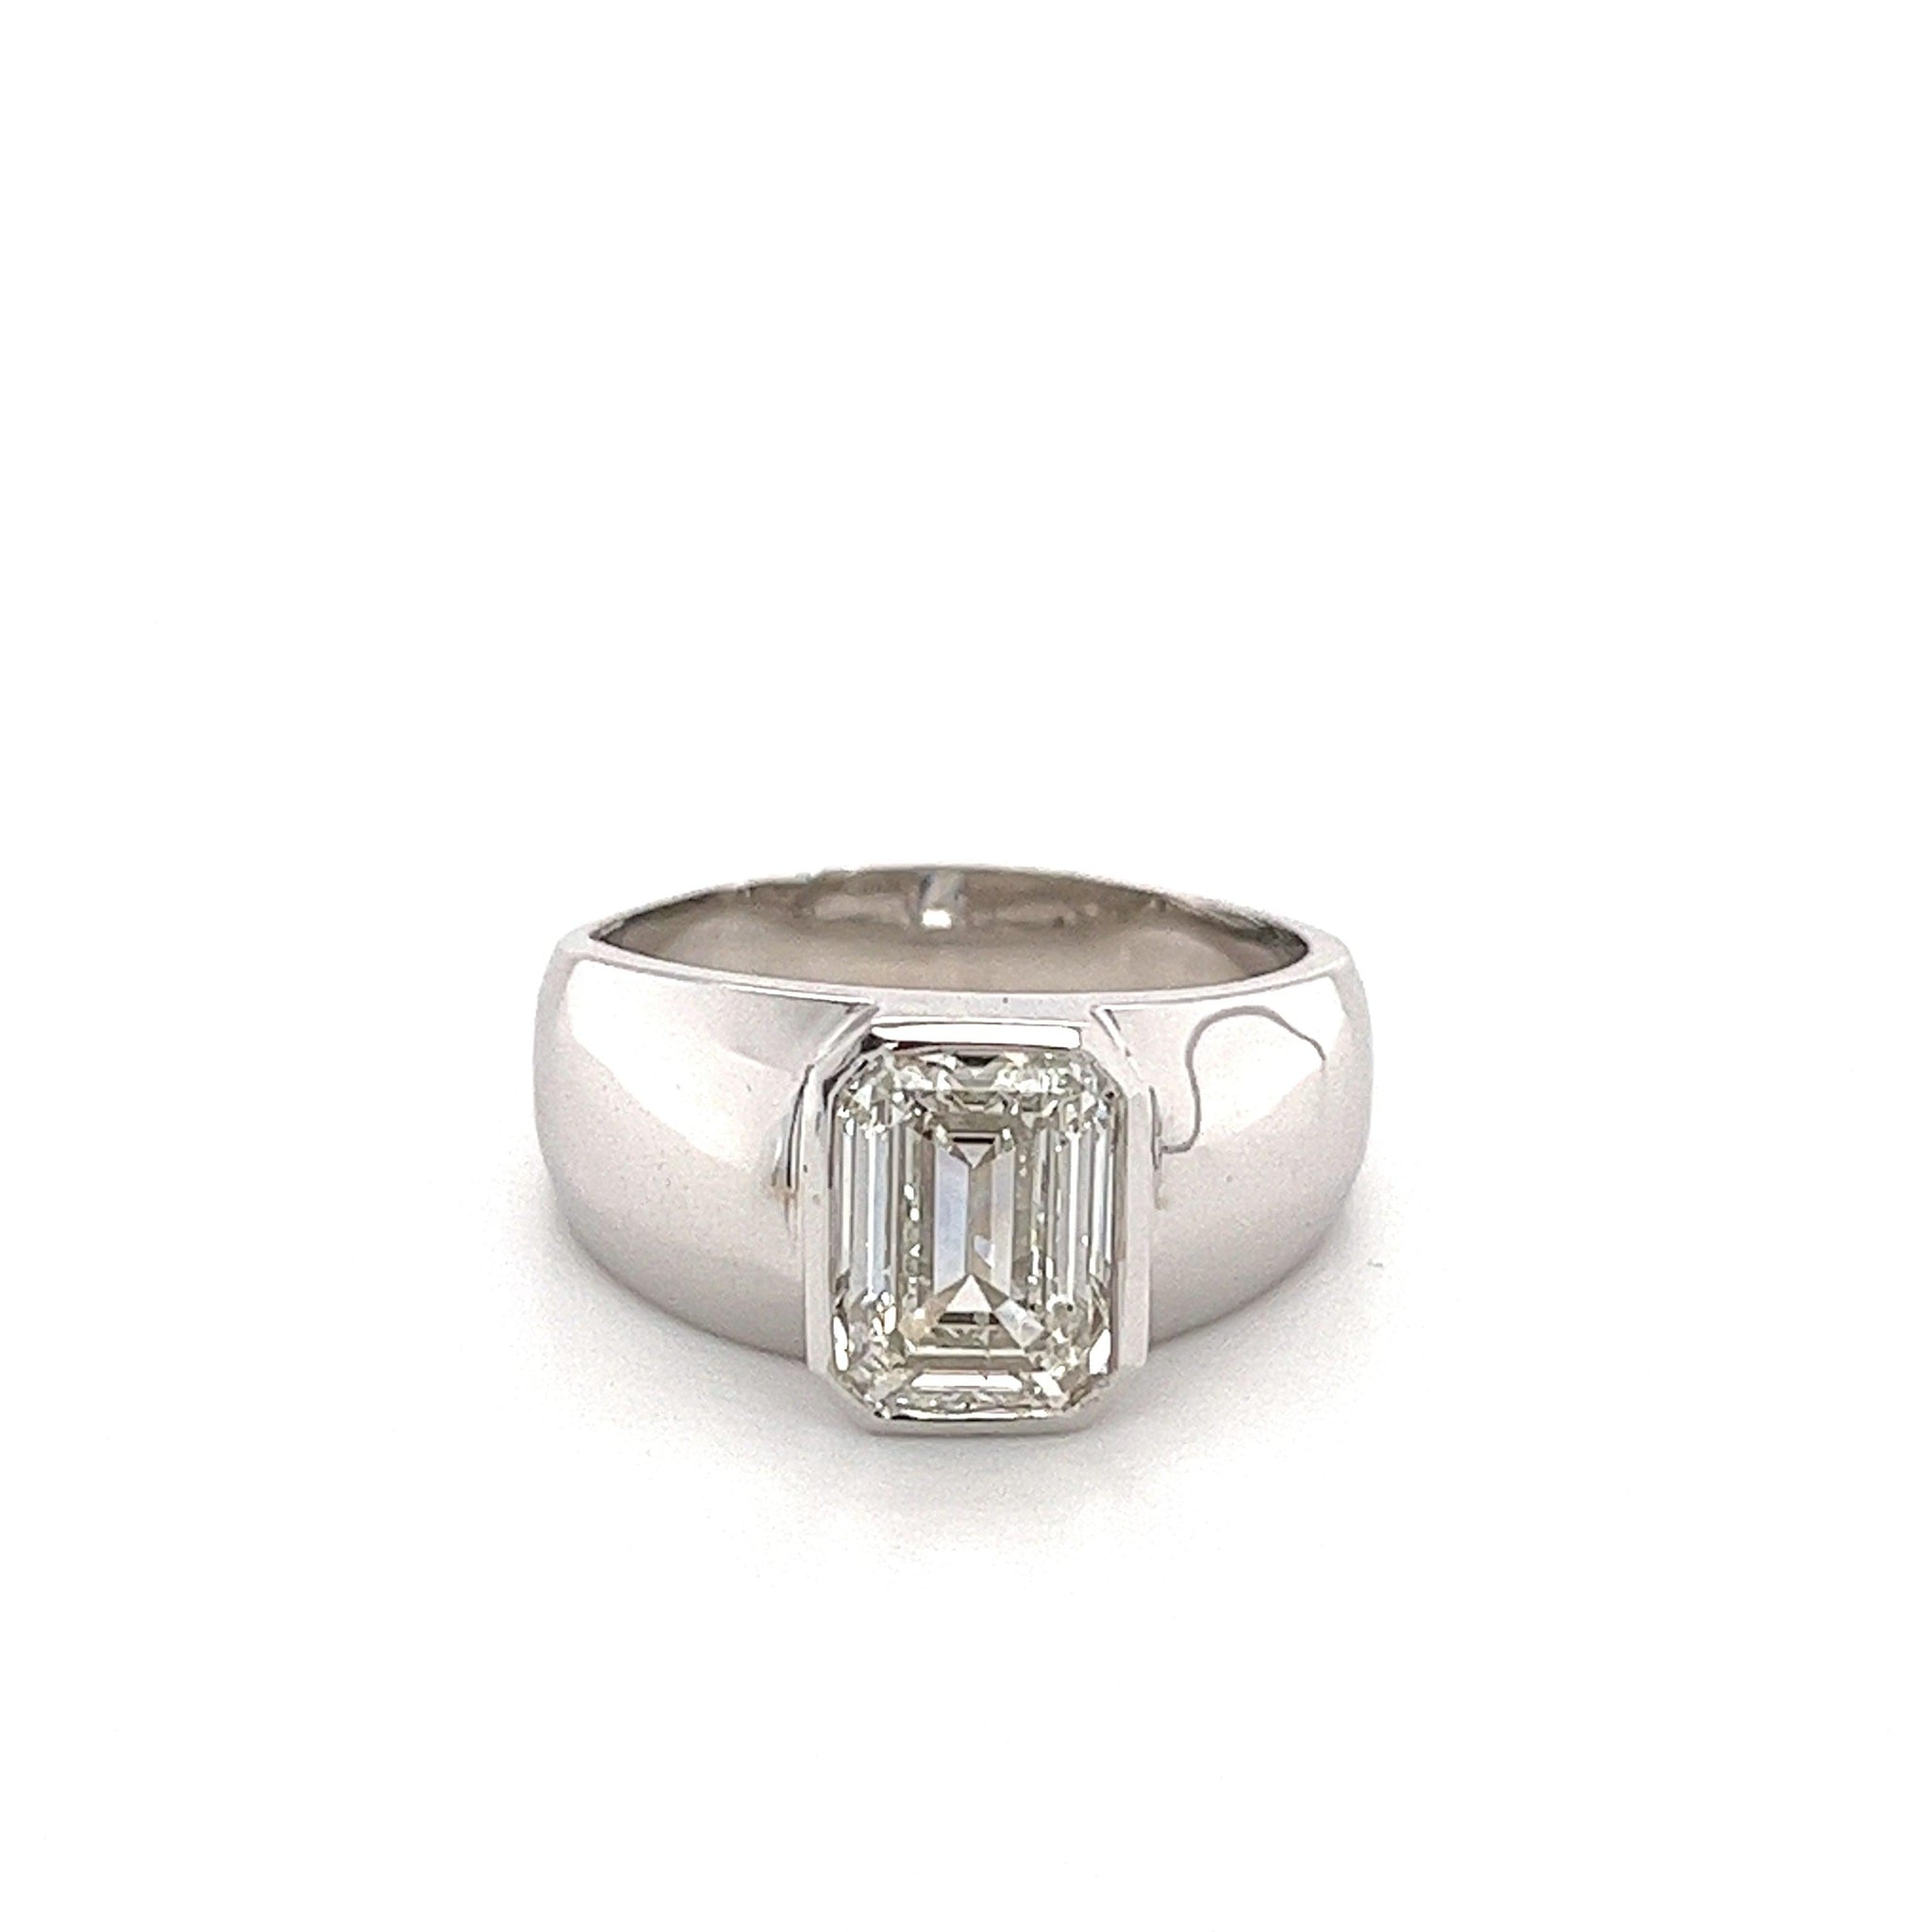 Bezel Set 2 Carat Emerald Cut Lab grown Diamond Ring in 14K White Gold-Rings-ASSAY